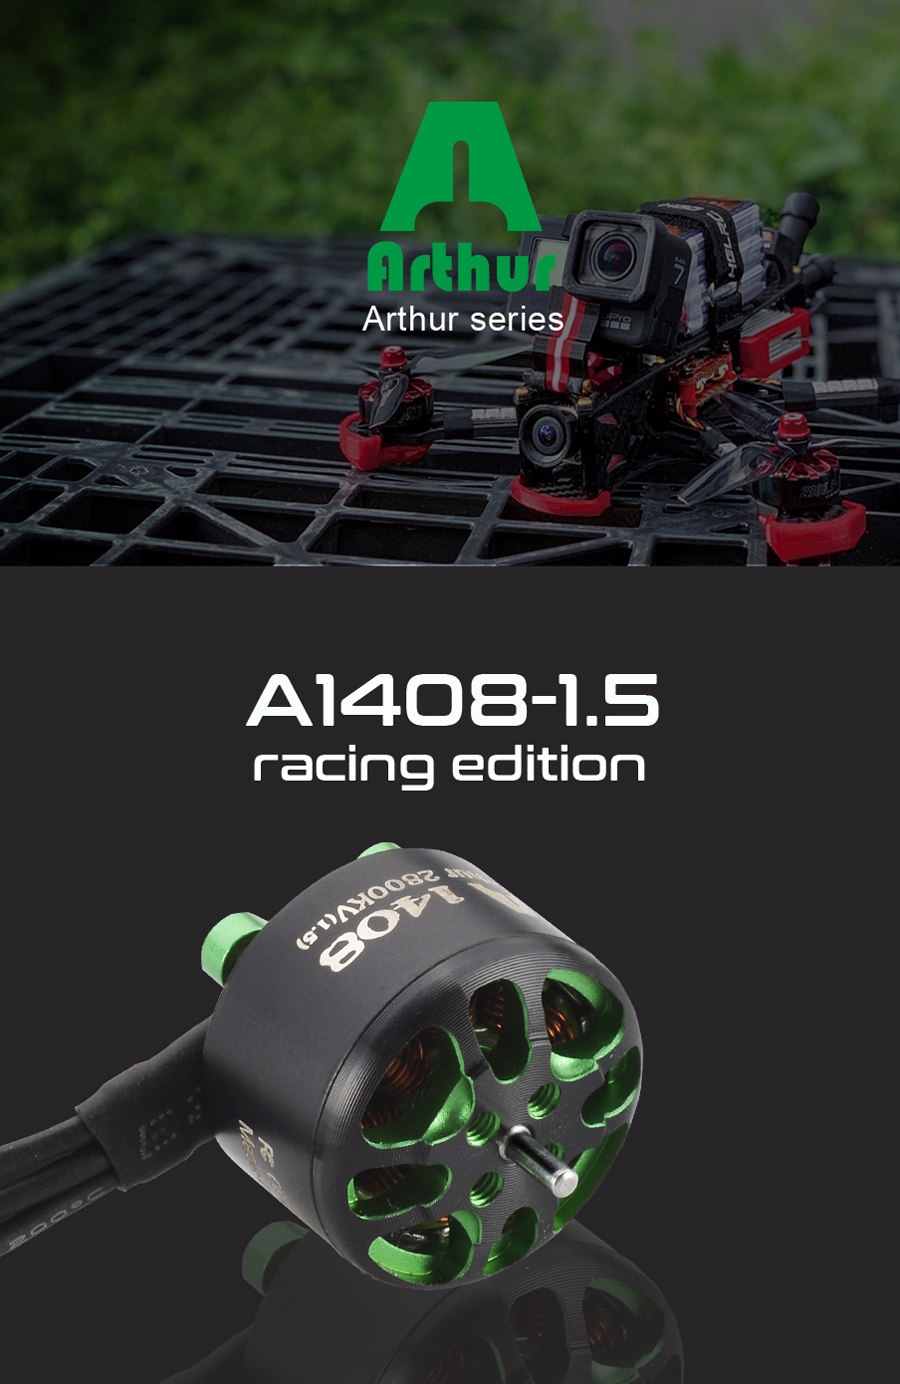 Flashhobby Arthur Series A1408 1408 2800KV 2-6S / 3650KV 2-4S Brushless Motor with 1.5mm / 5mm Shaft for RC Drone FPV Racing